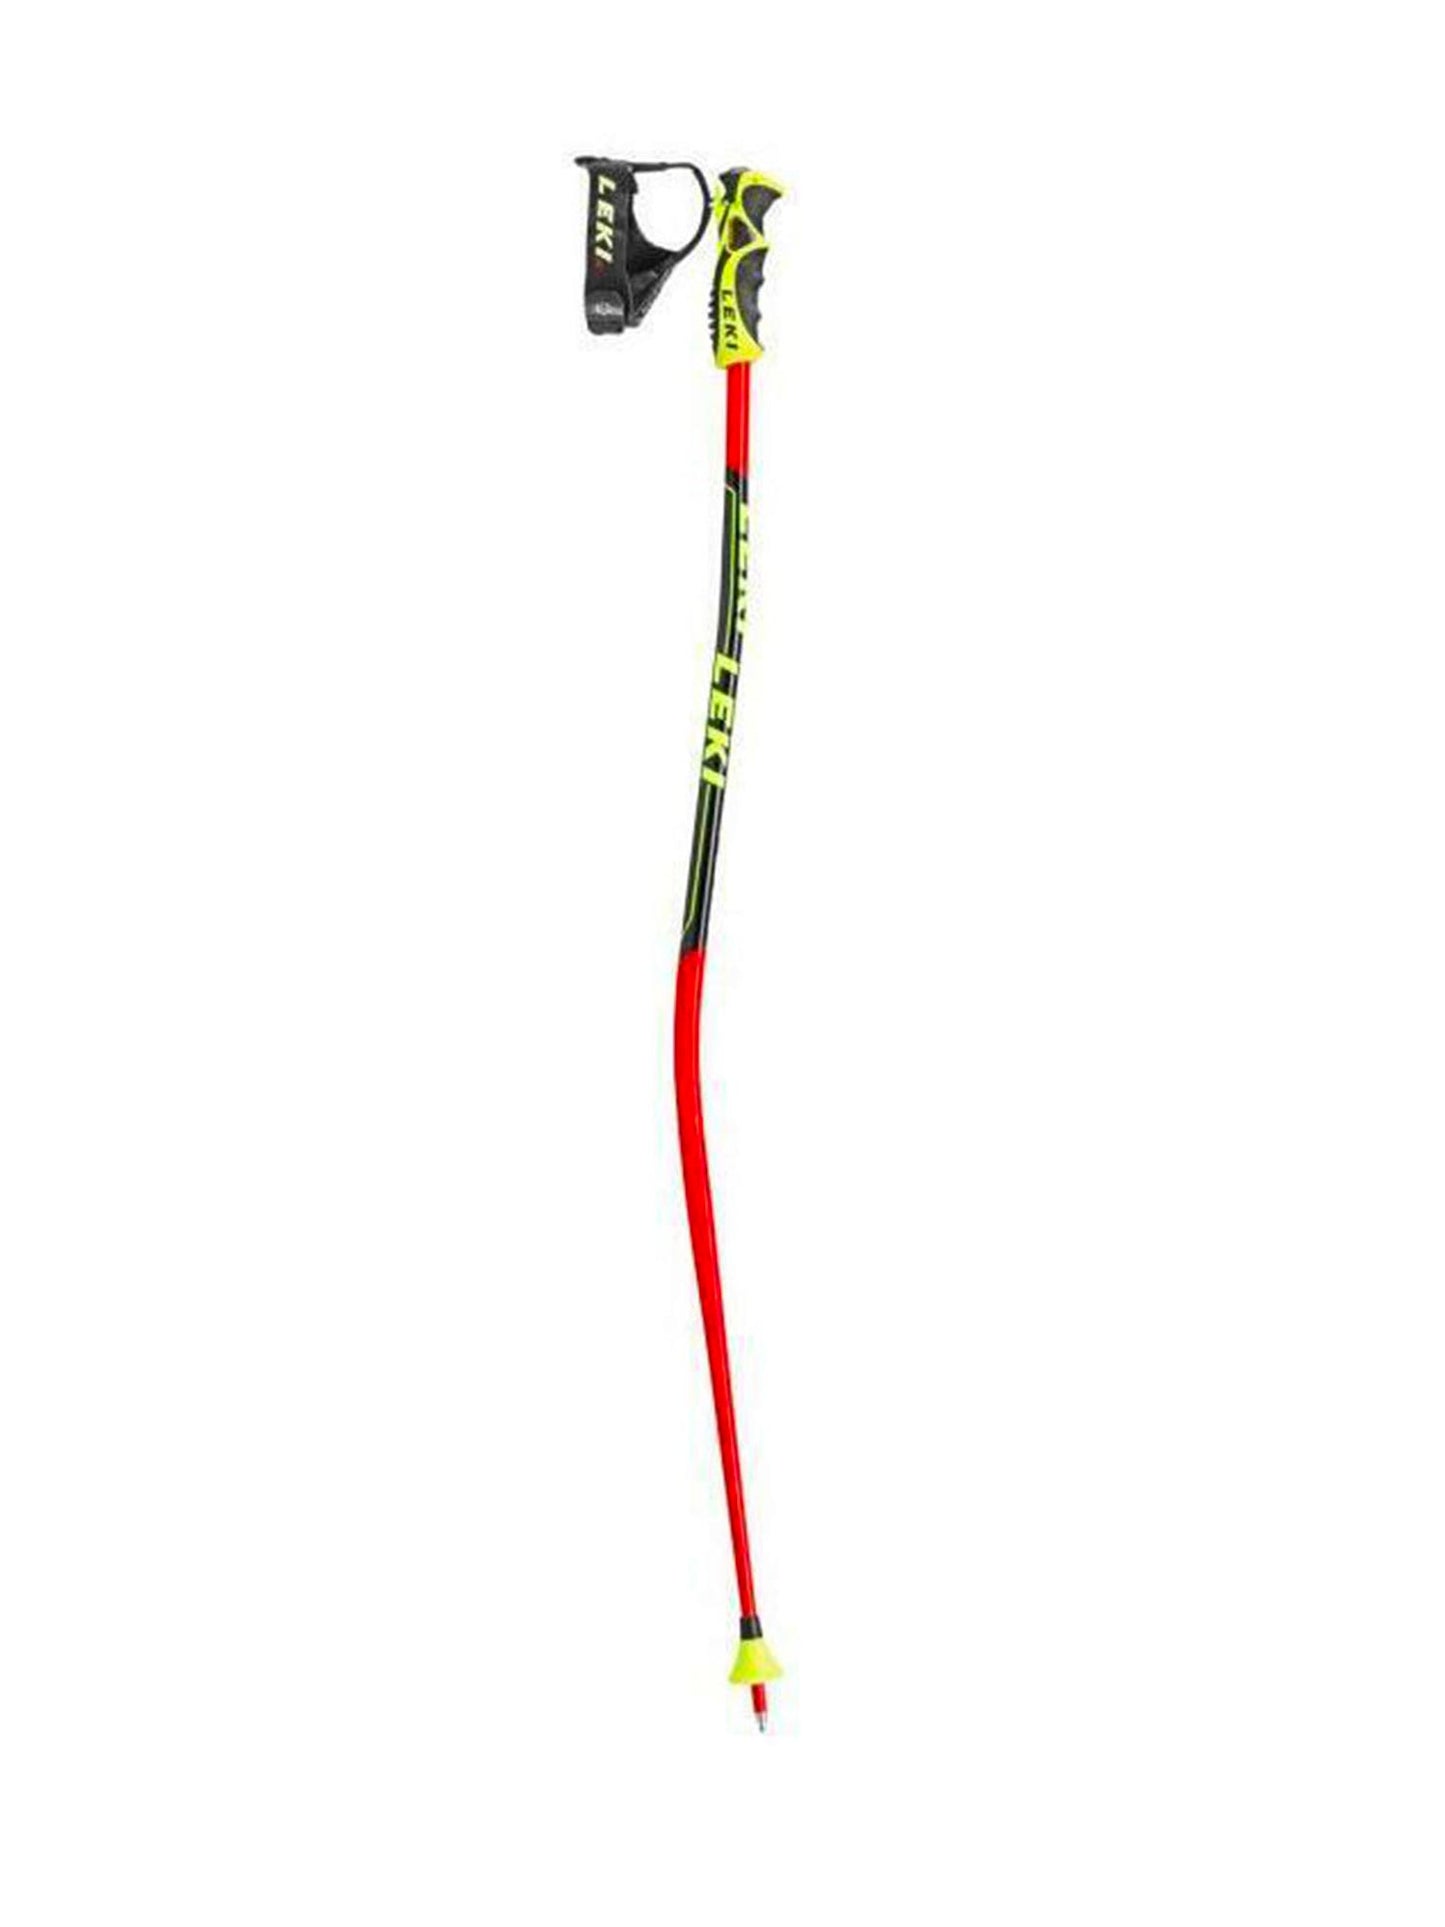 Leki World Cup GS ski poles, red, black and yellow